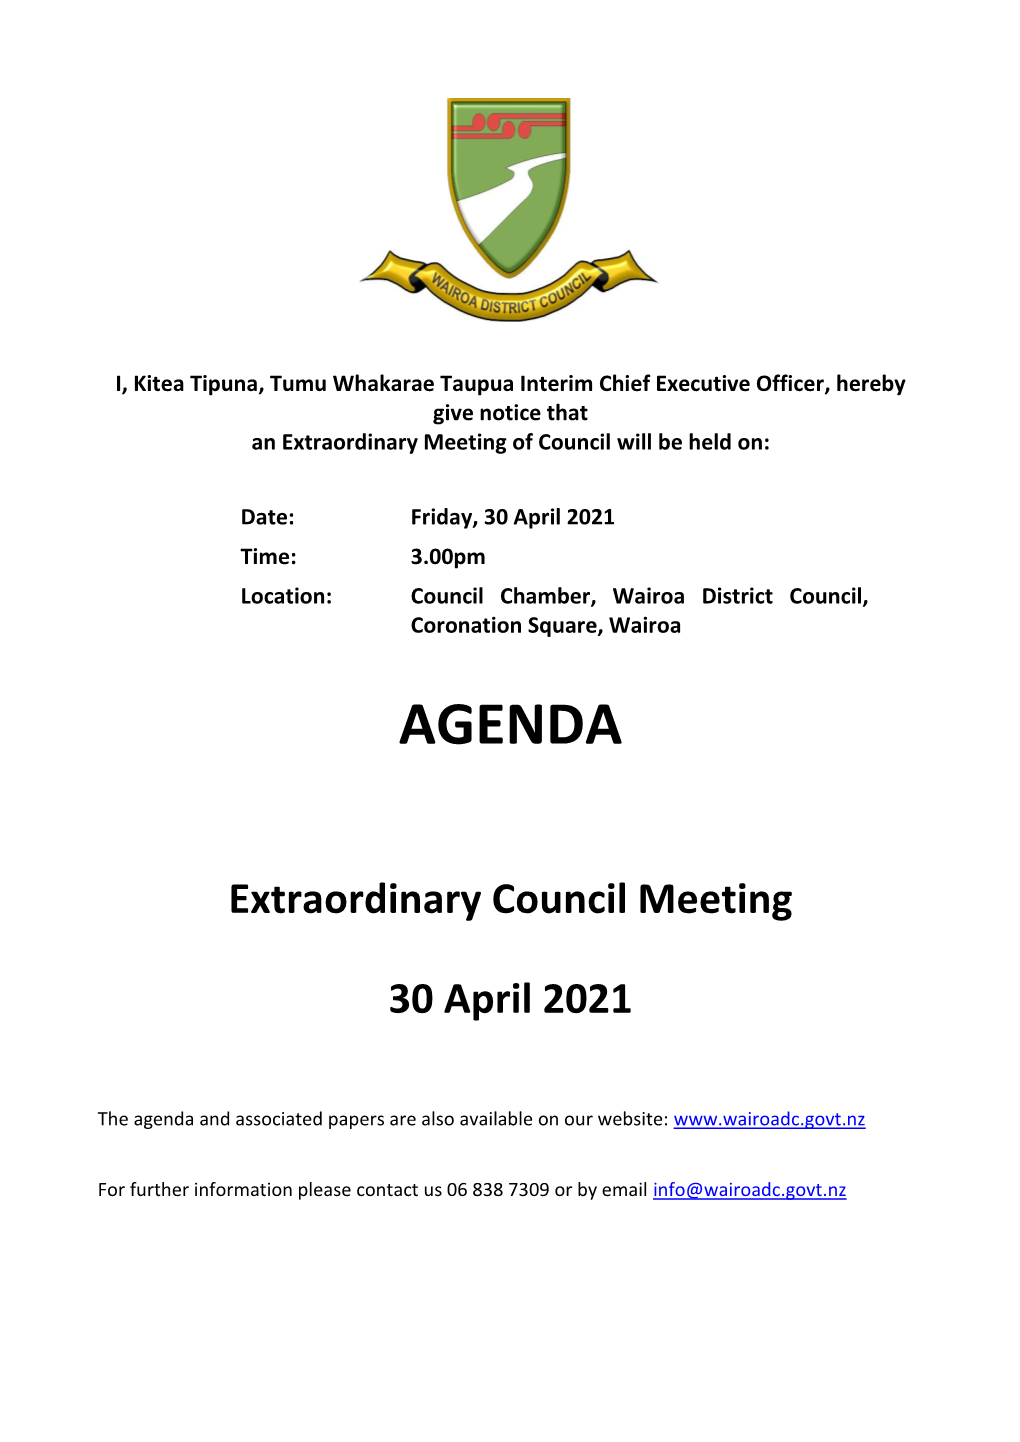 Agenda of Extraordinary Council Meeting